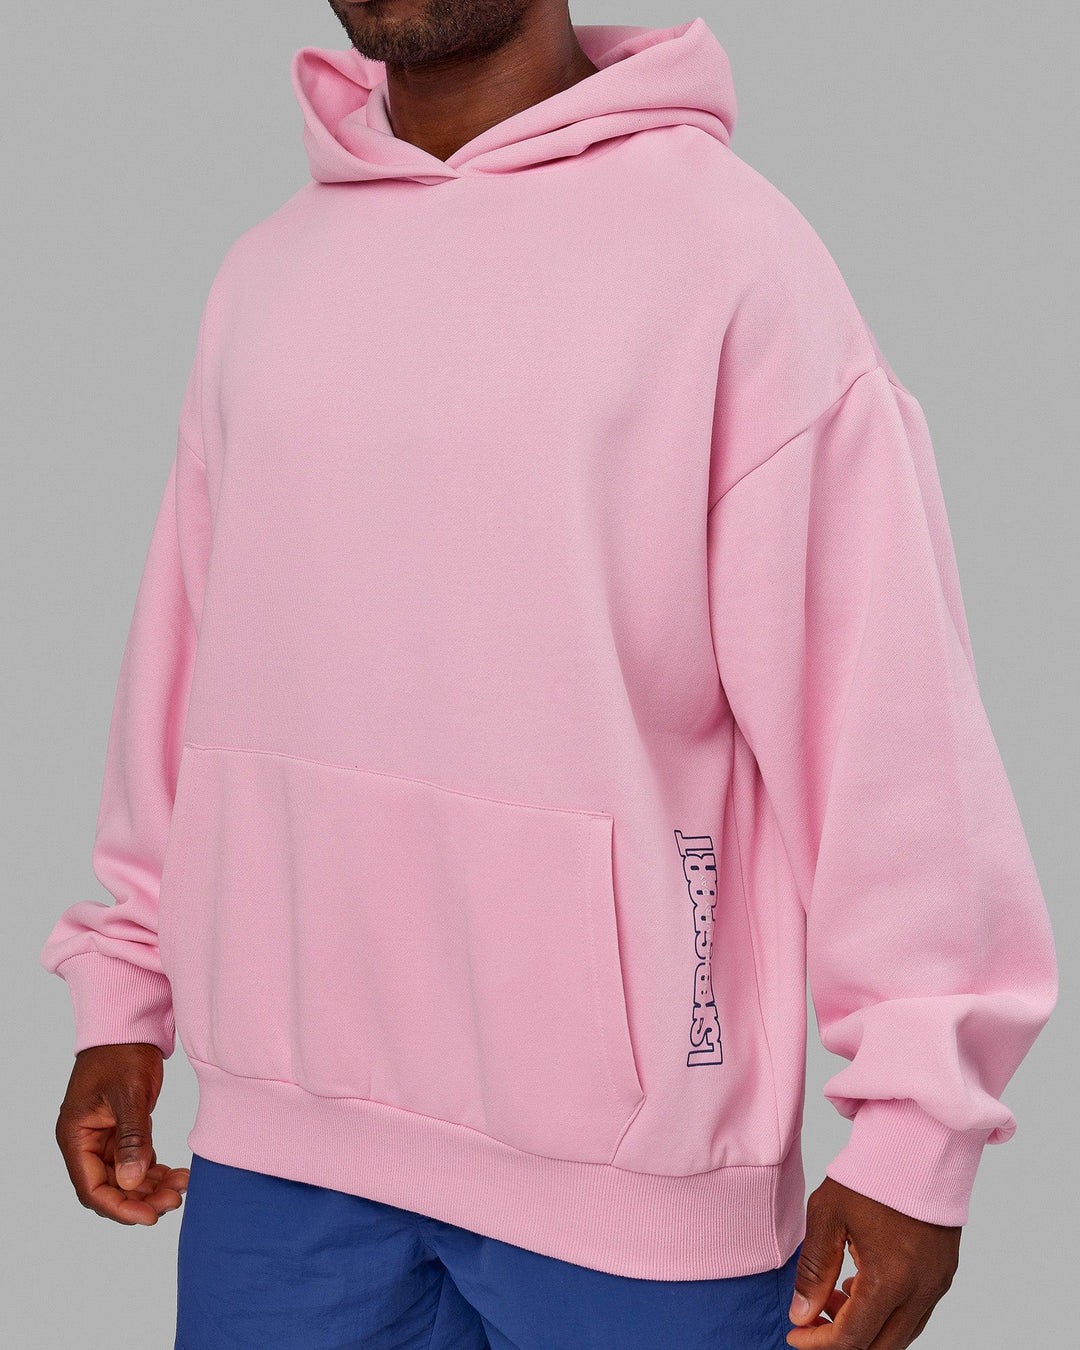 Man wearing wearing Unisex Urban Hoodie Oversize - Pink Frosting-Galactic Blue